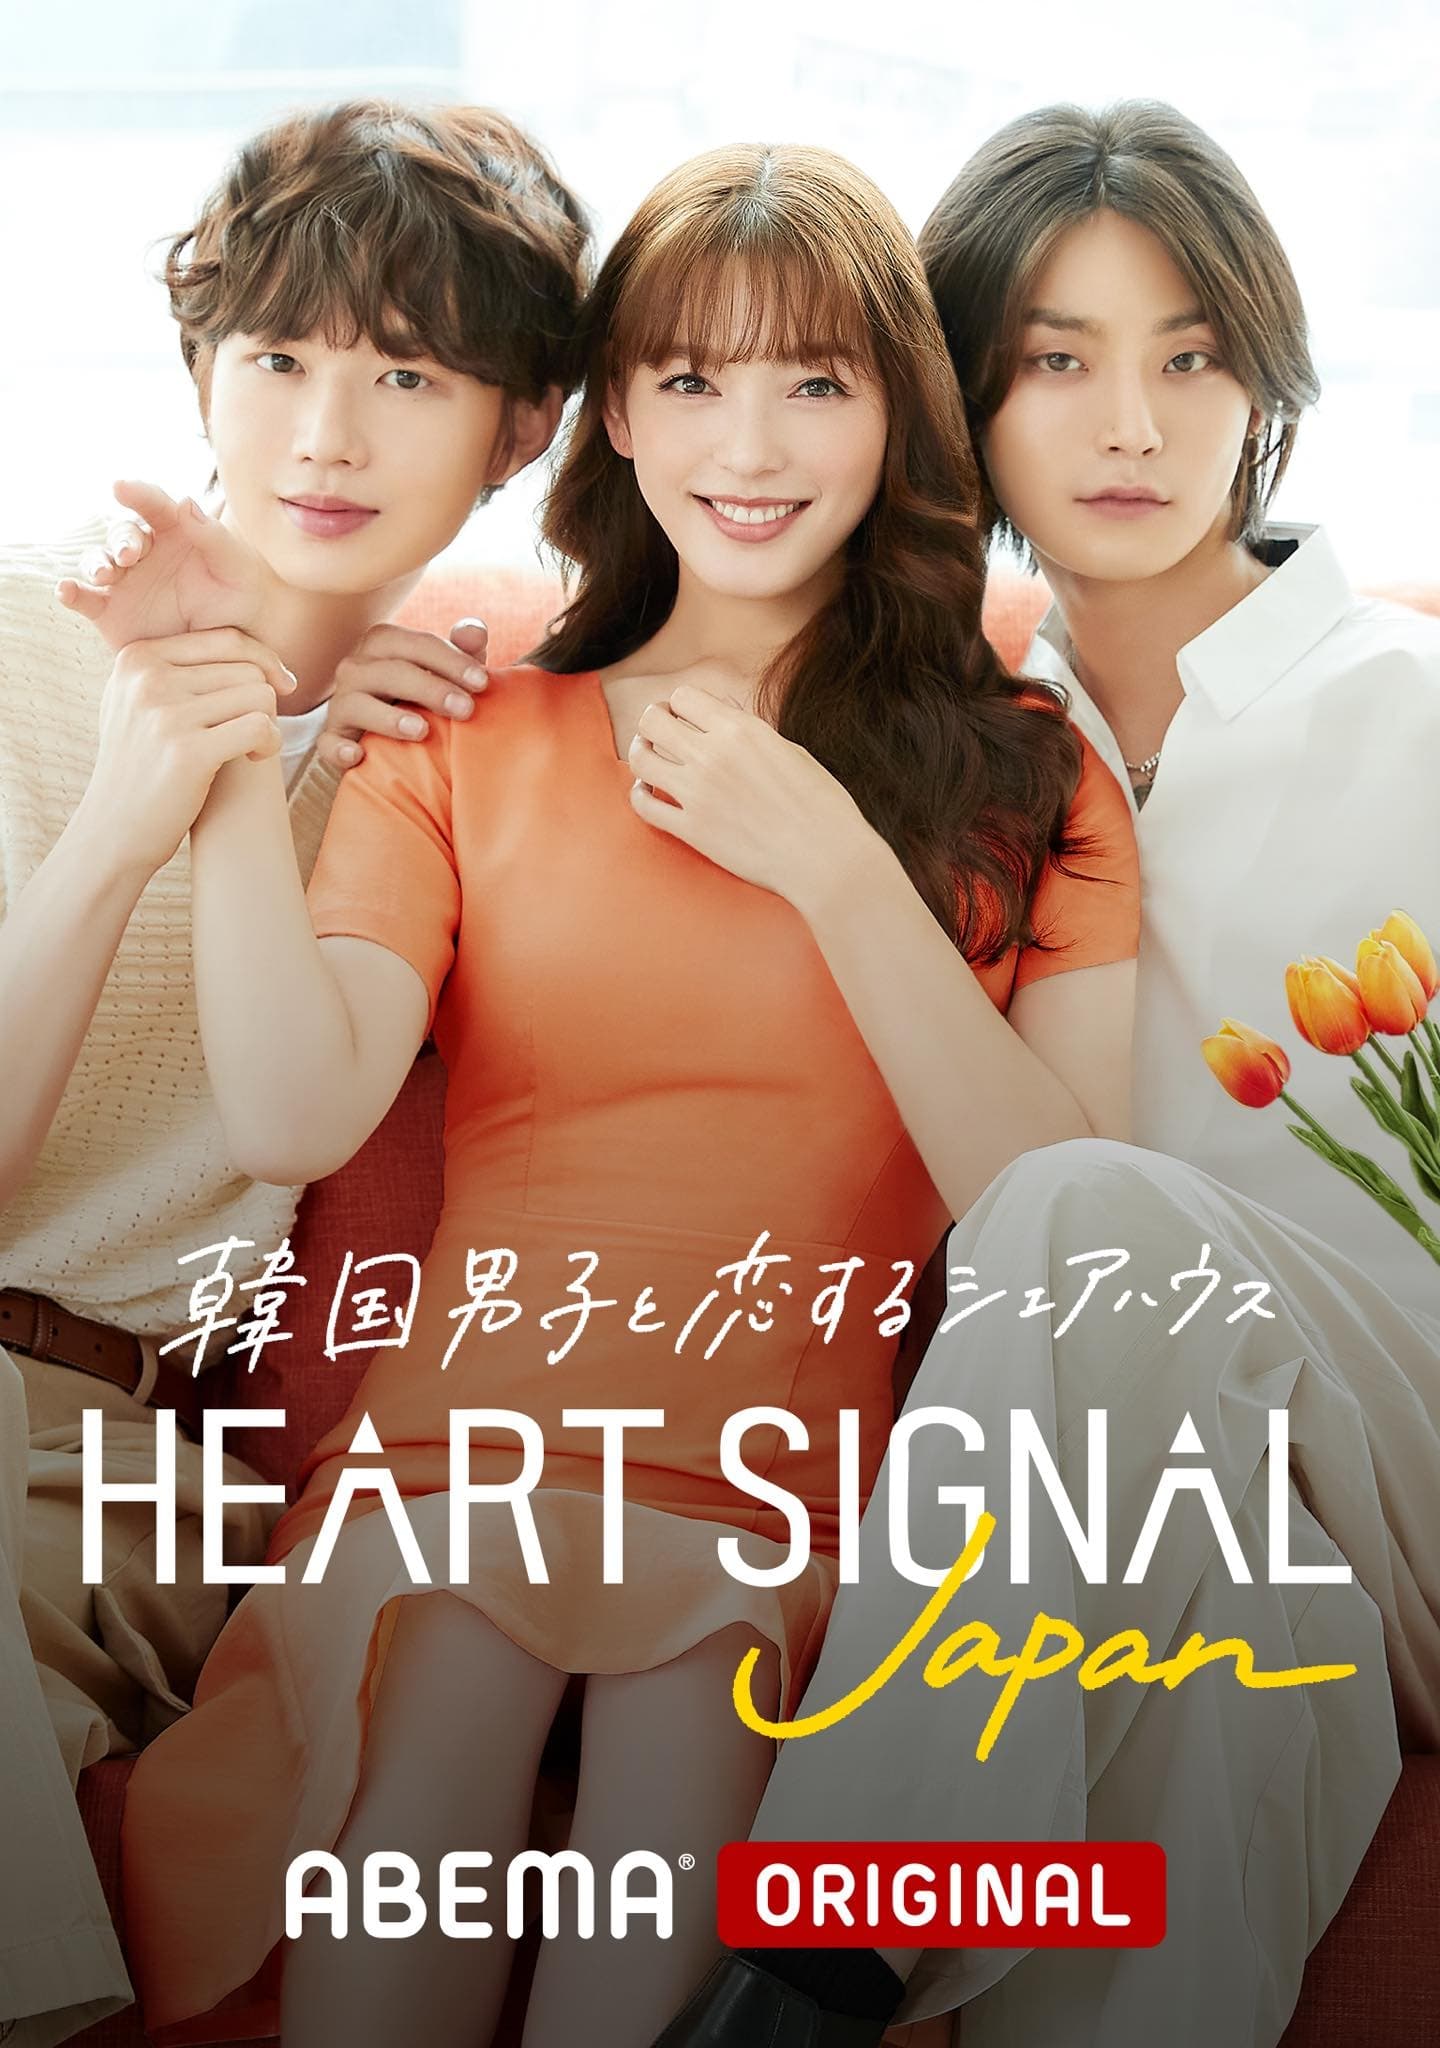 TV ratings for Heart Signal Japan in India. AbemaTV TV series